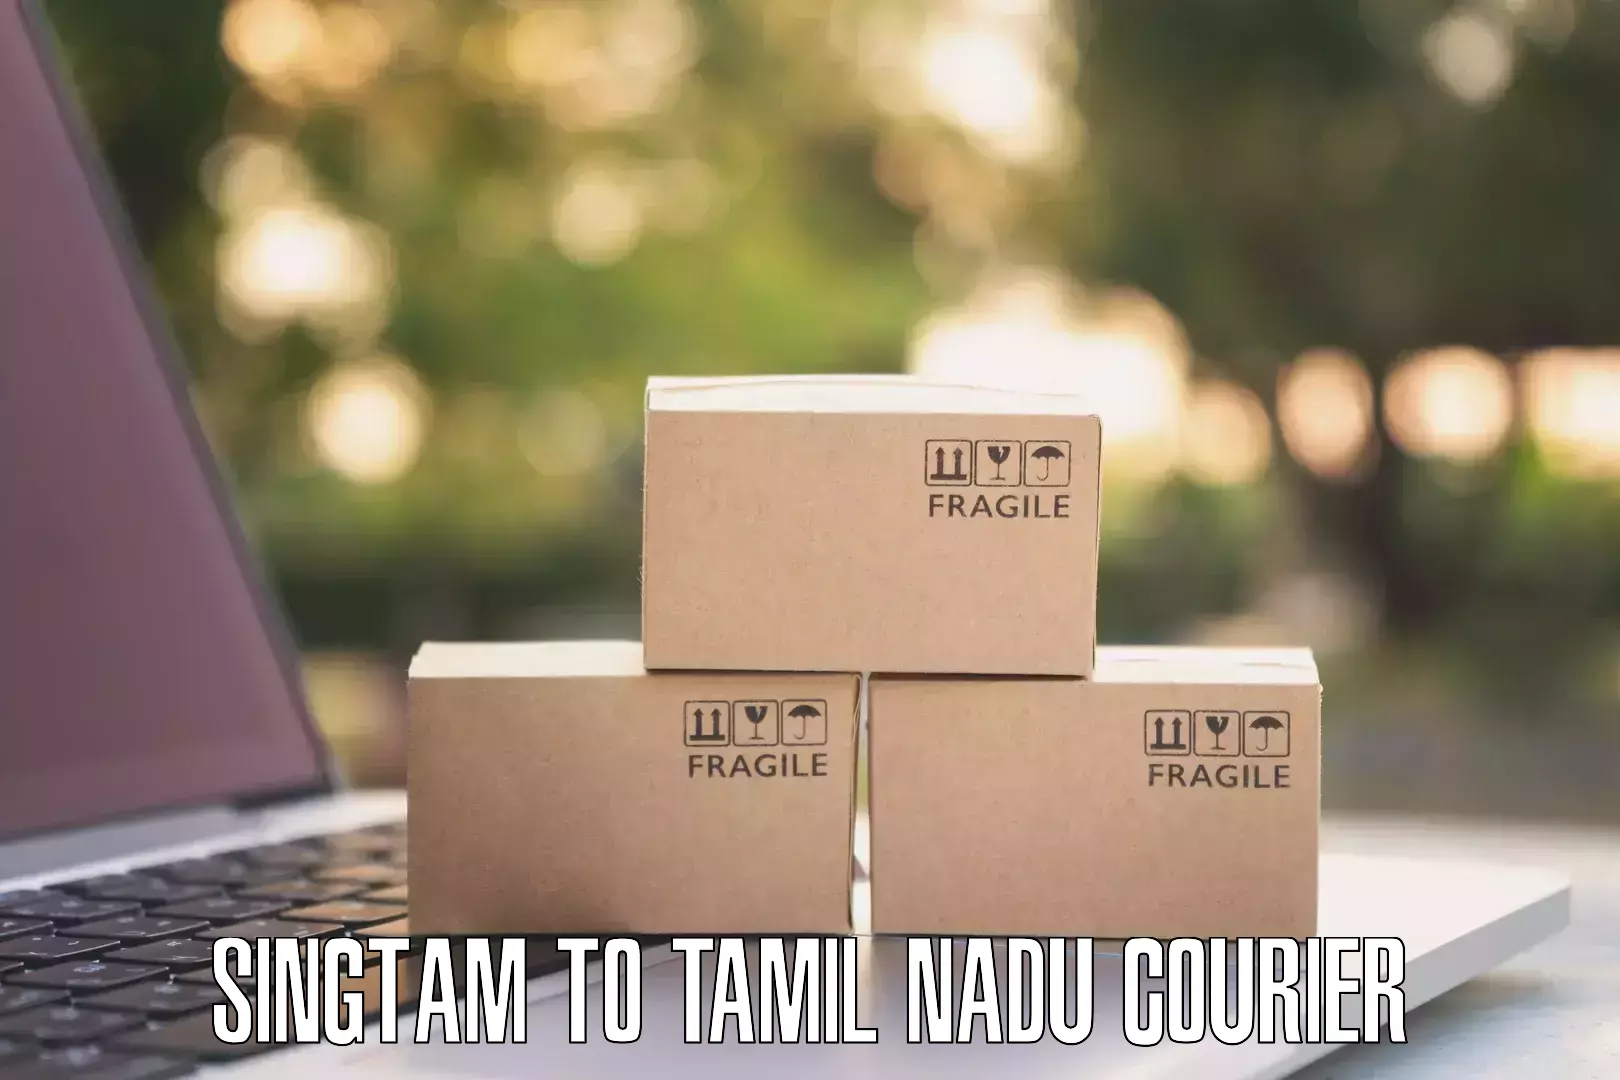 Package delivery network Singtam to Tamil Nadu